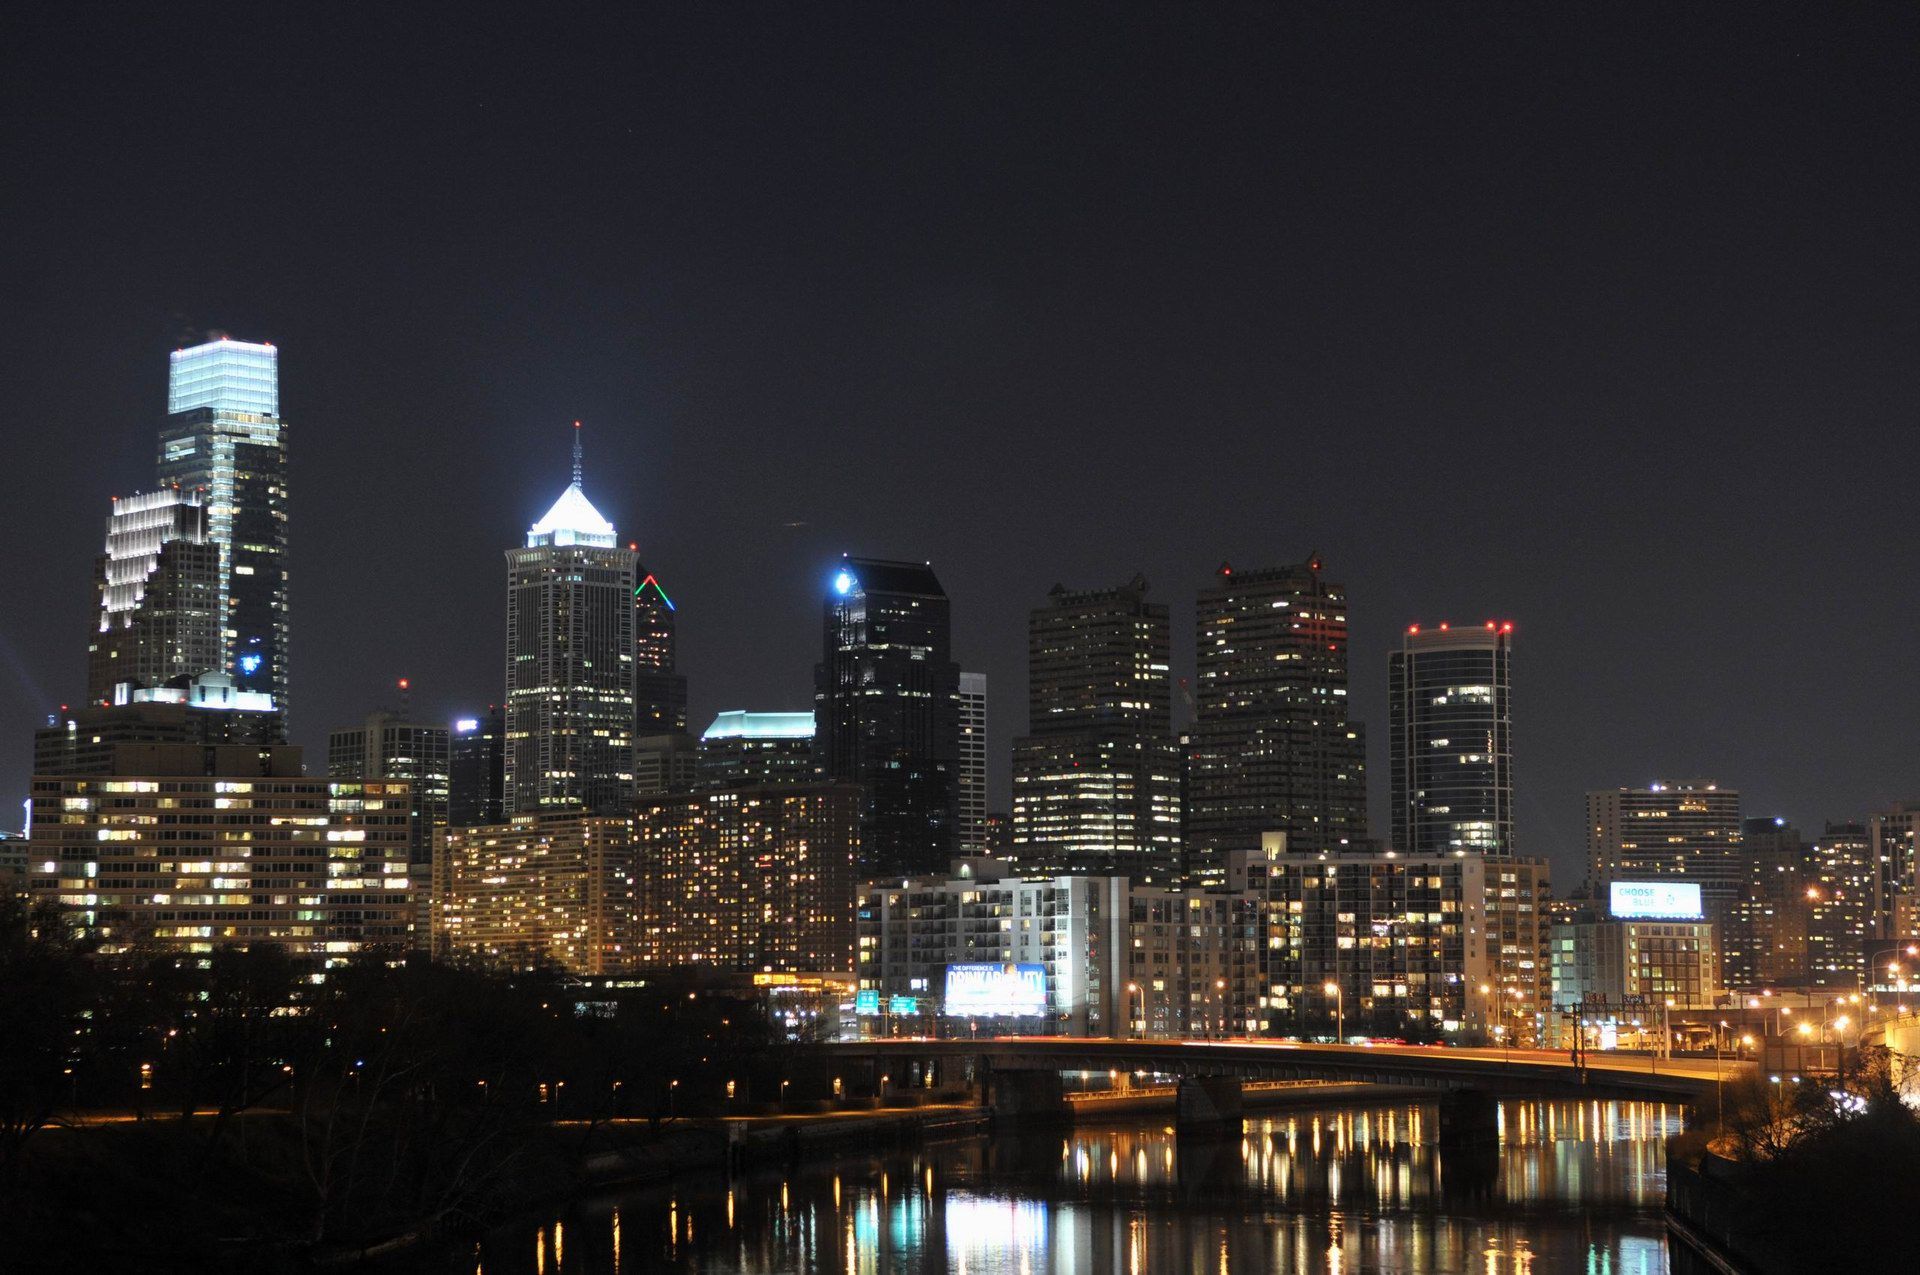 Philadelphia Skyline At Night - wallpaper.